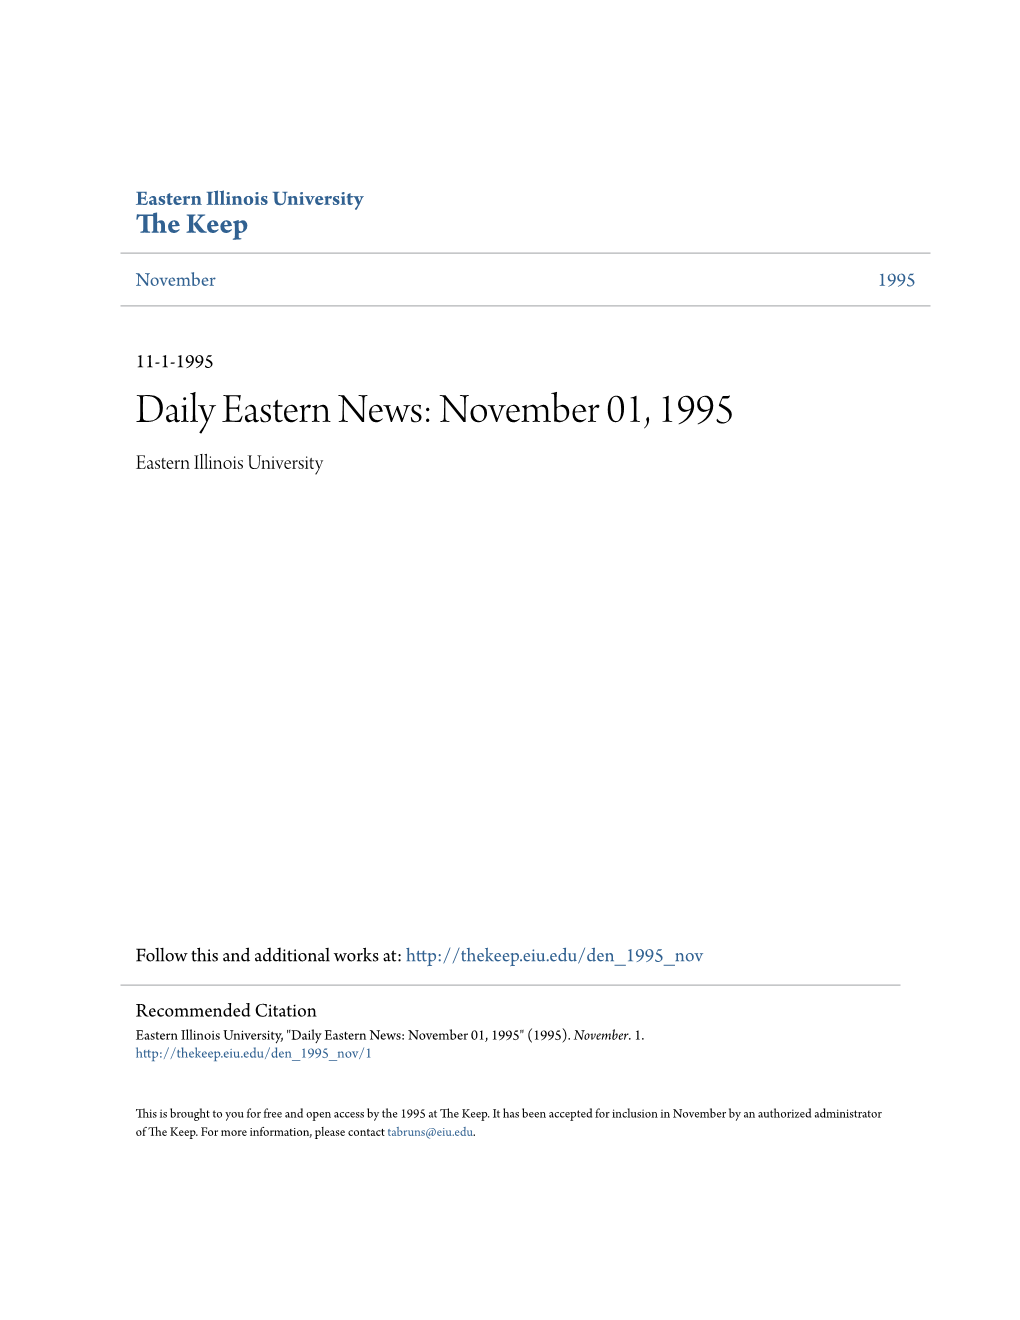 Daily Eastern News: November 01, 1995 Eastern Illinois University